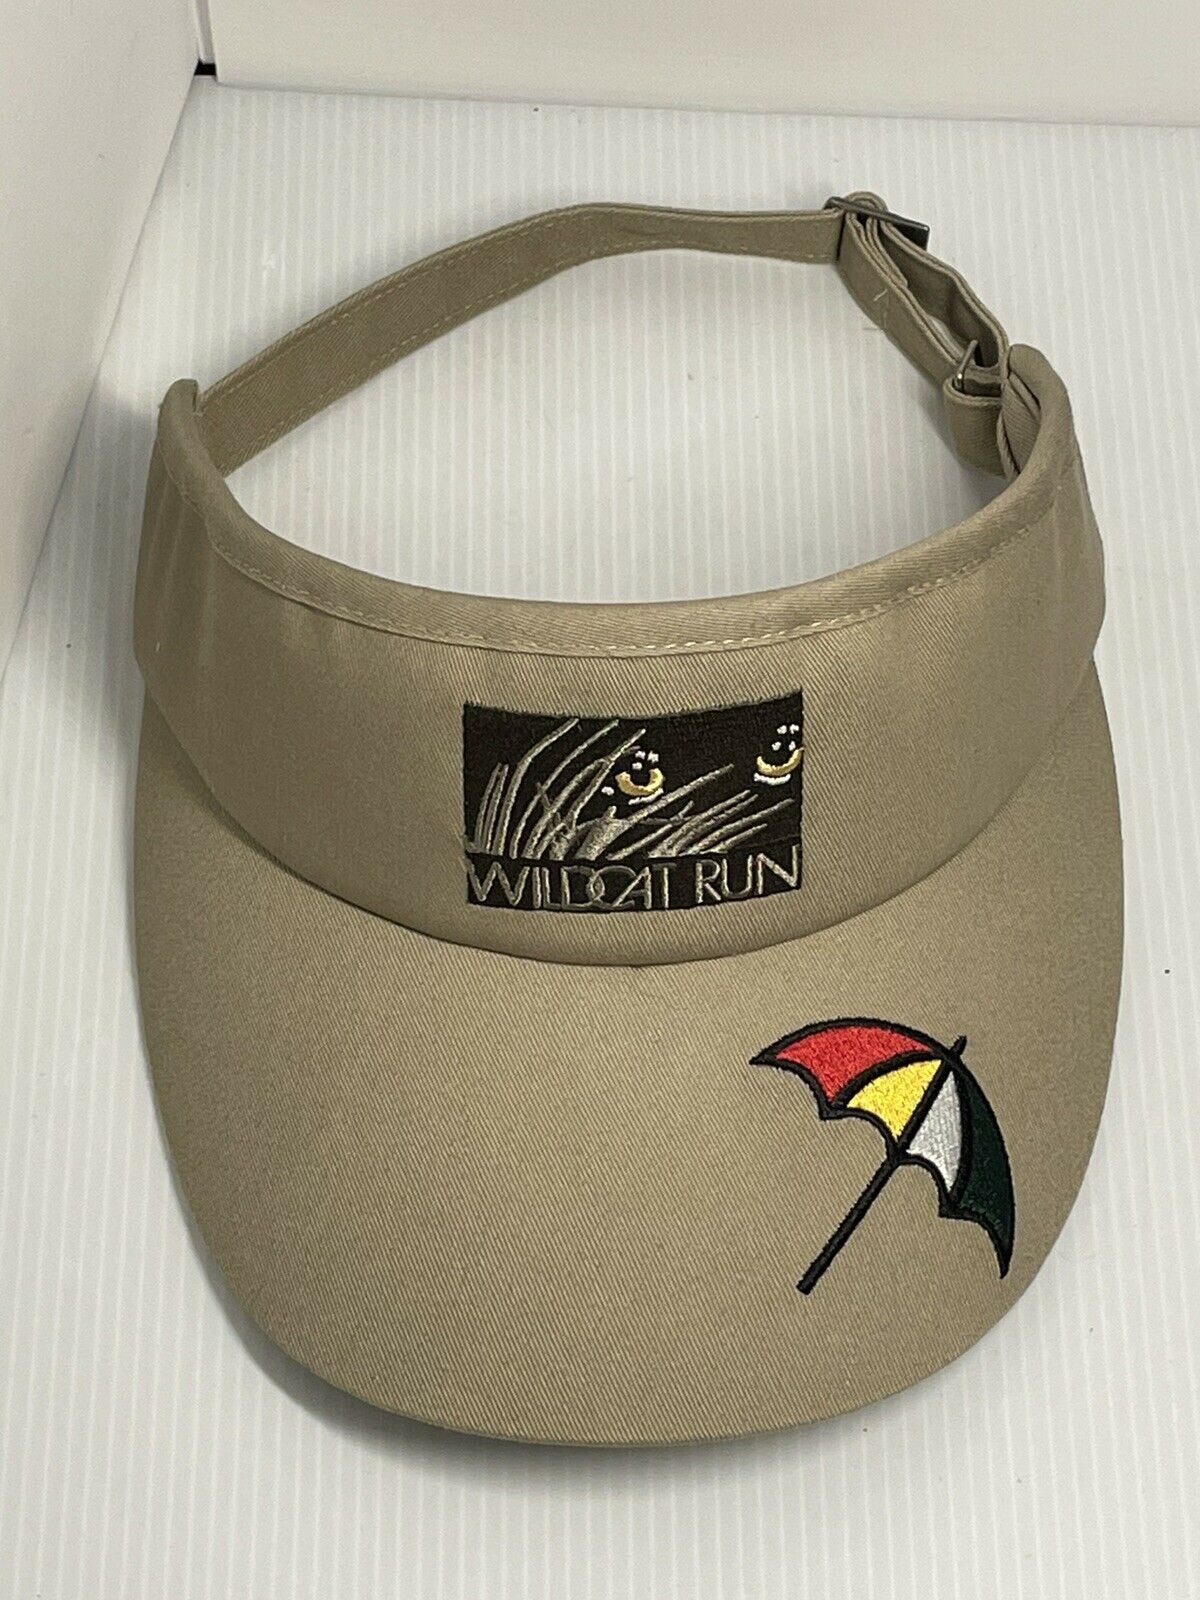 Primary image for Wildcat Run Country Club Golf PGA Visor Cap Tan Umbrella Gear For Sports Adjust